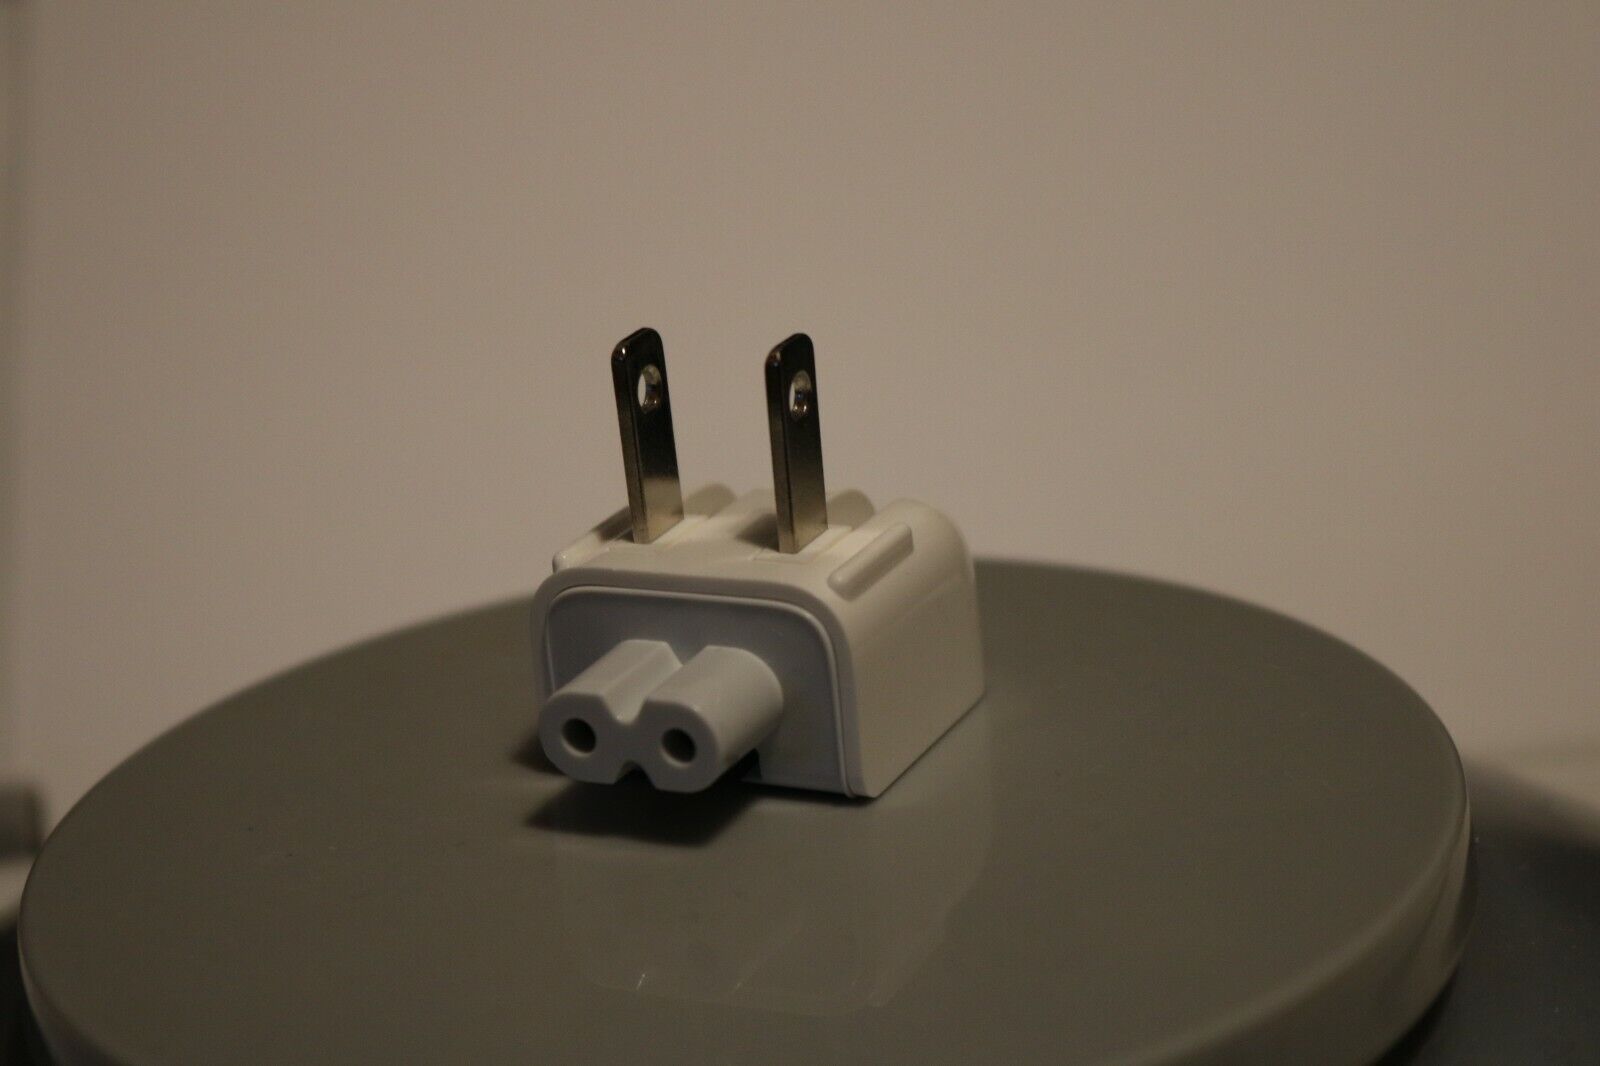 1 x Original Apple Macbook Pro Air AC Power Adapter Charger Wall Plug Heads